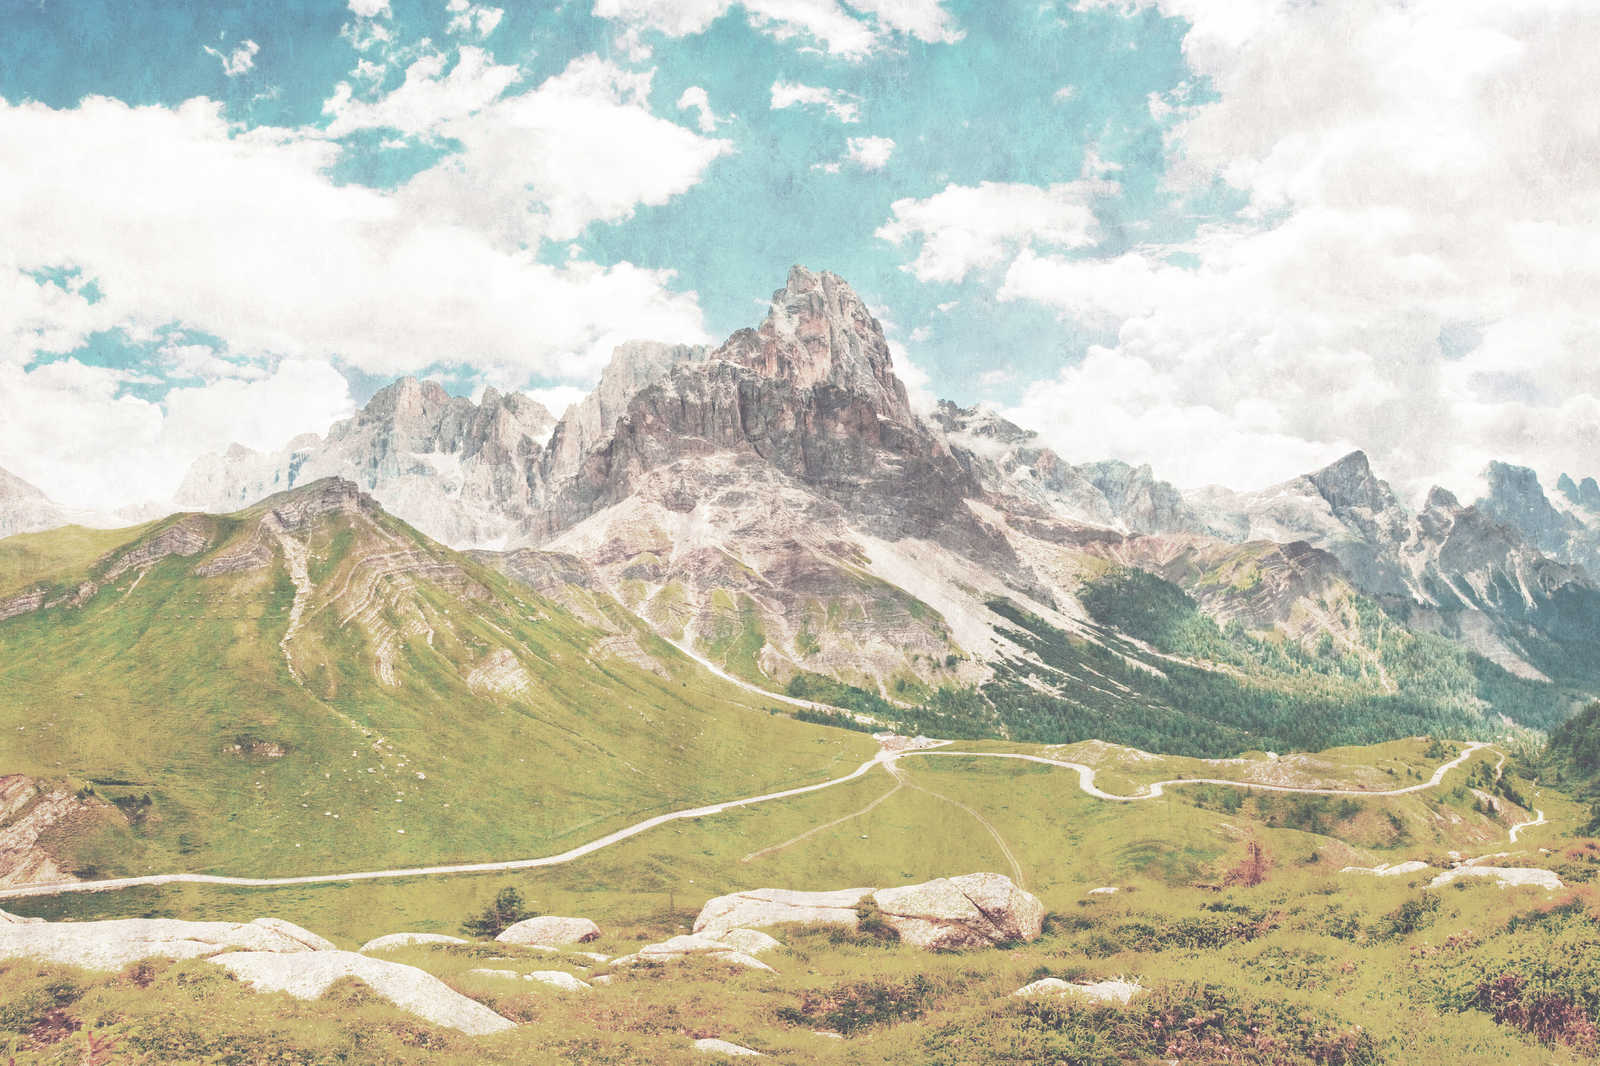             Dolomiti 2 - Leinwandbild Dolomiten Retro Fotografie in Löschpapier Struktur – 0,90 m x 0,60 m
        